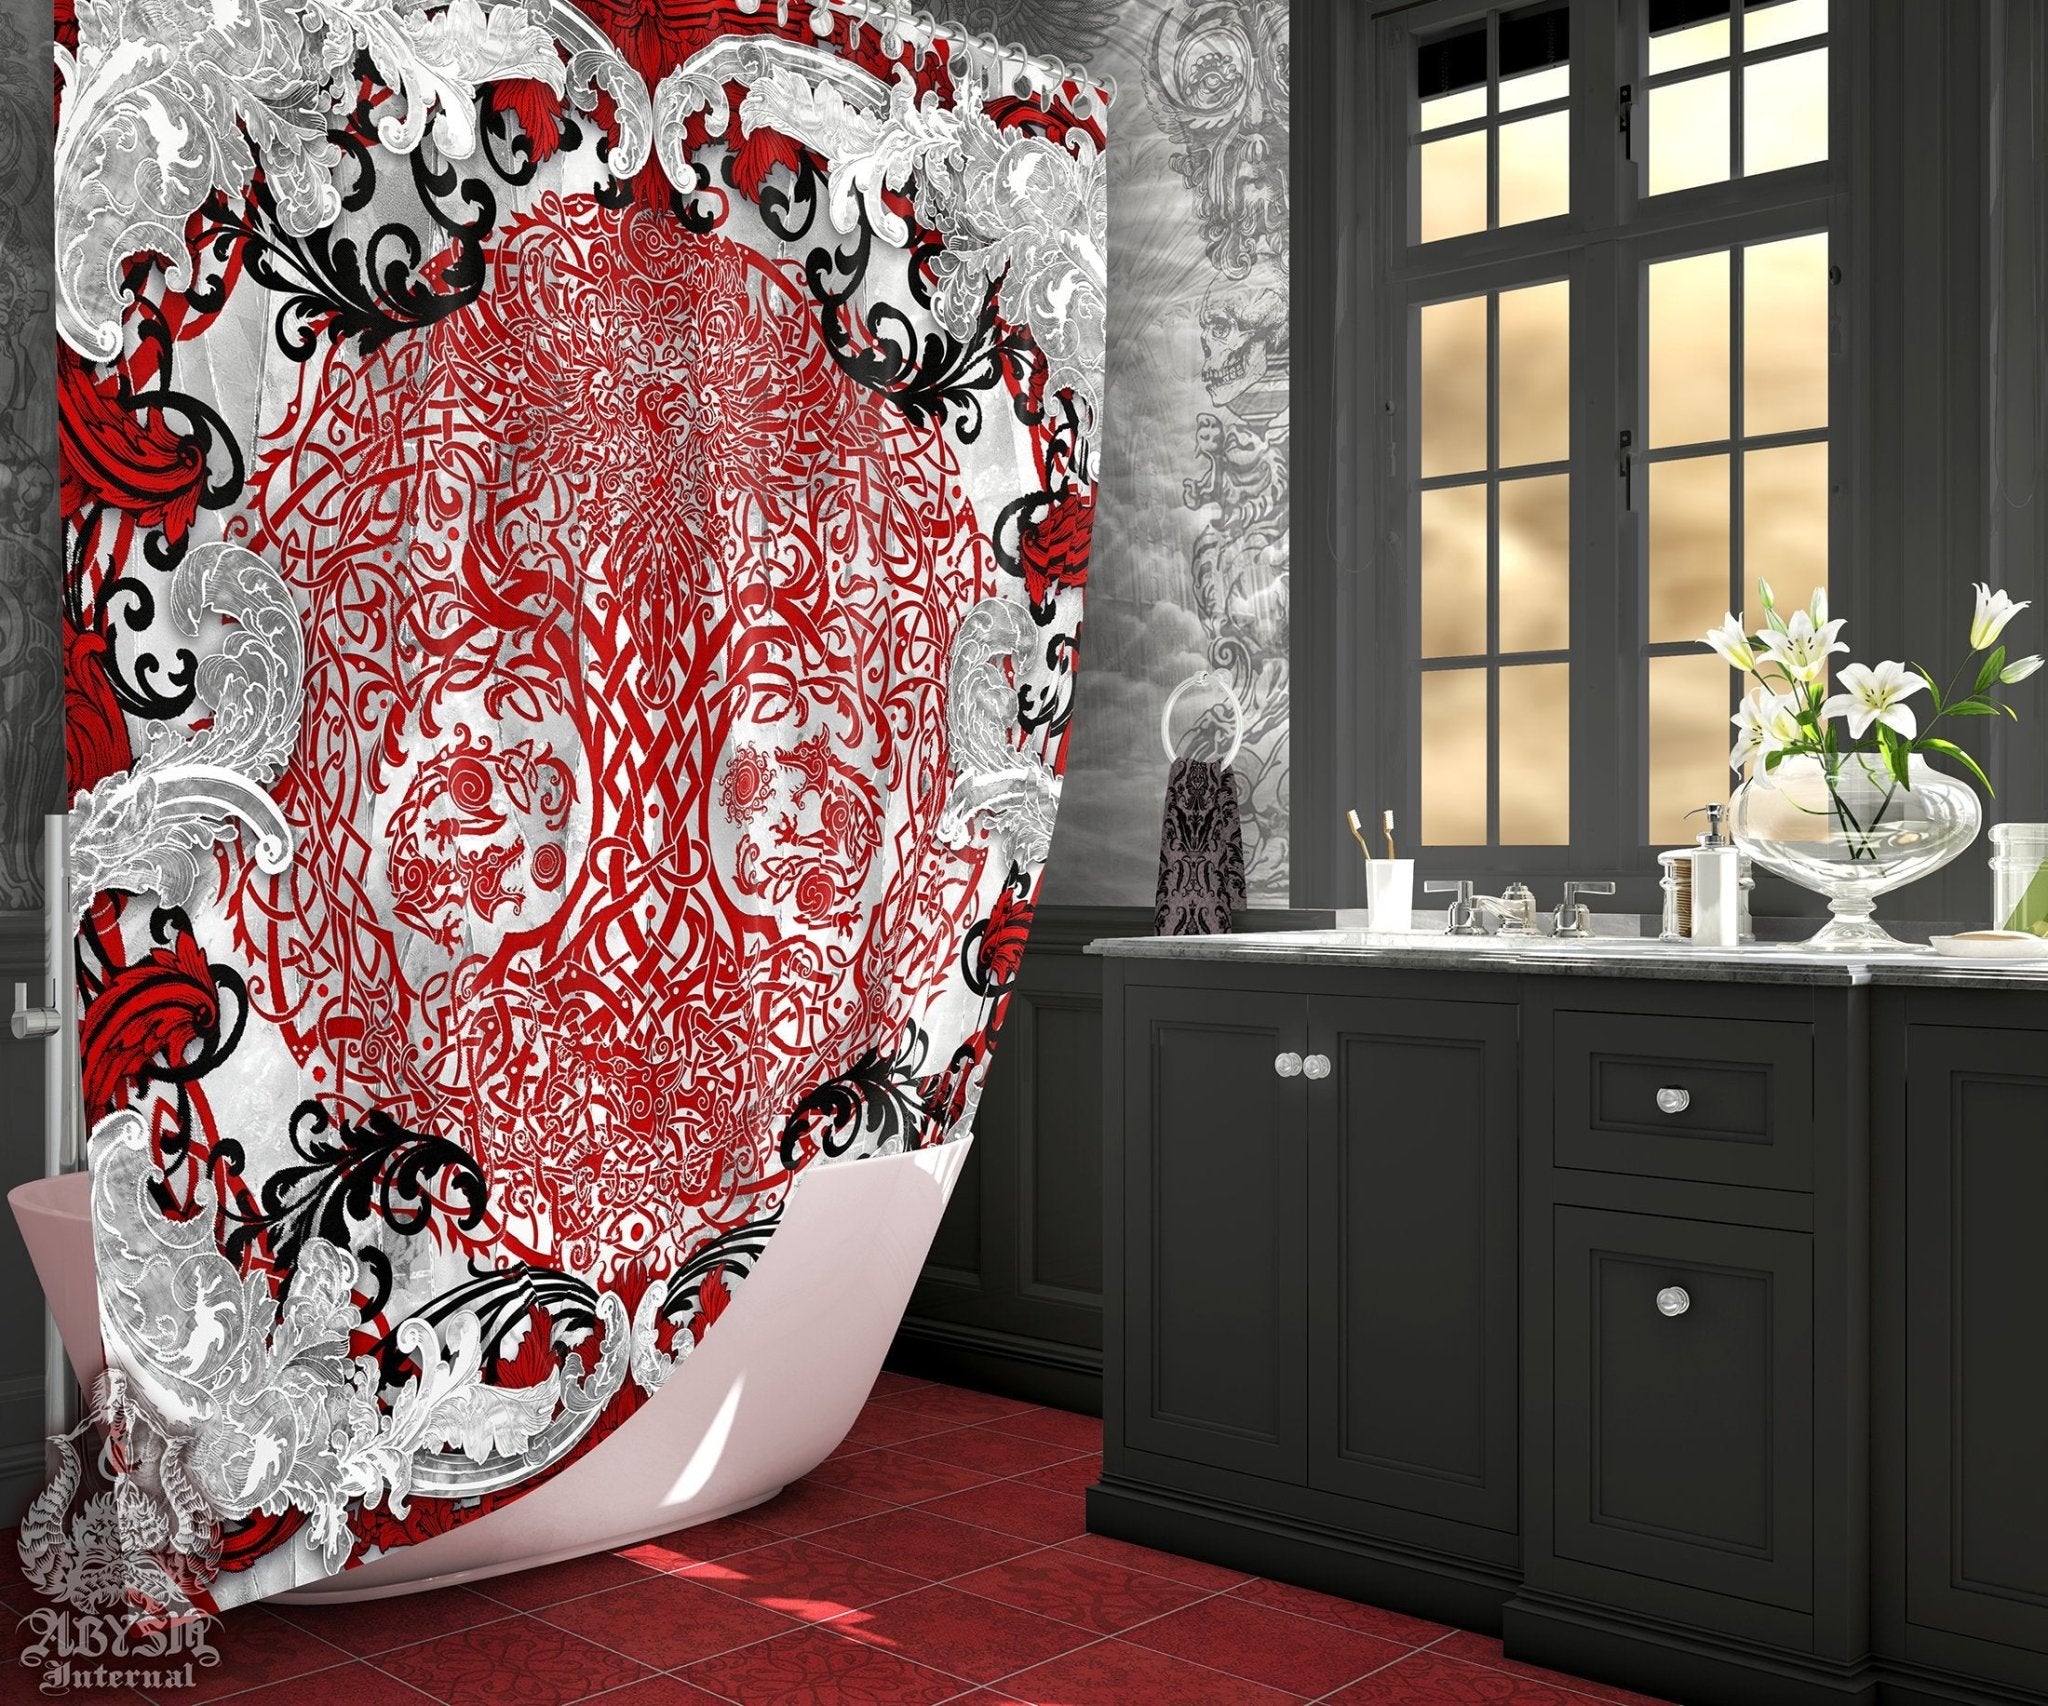 Viking Shower Curtain, Yggdrasil, Norse Bathroom Decor, Pagan, Tree of Life - Bloody White - Abysm Internal